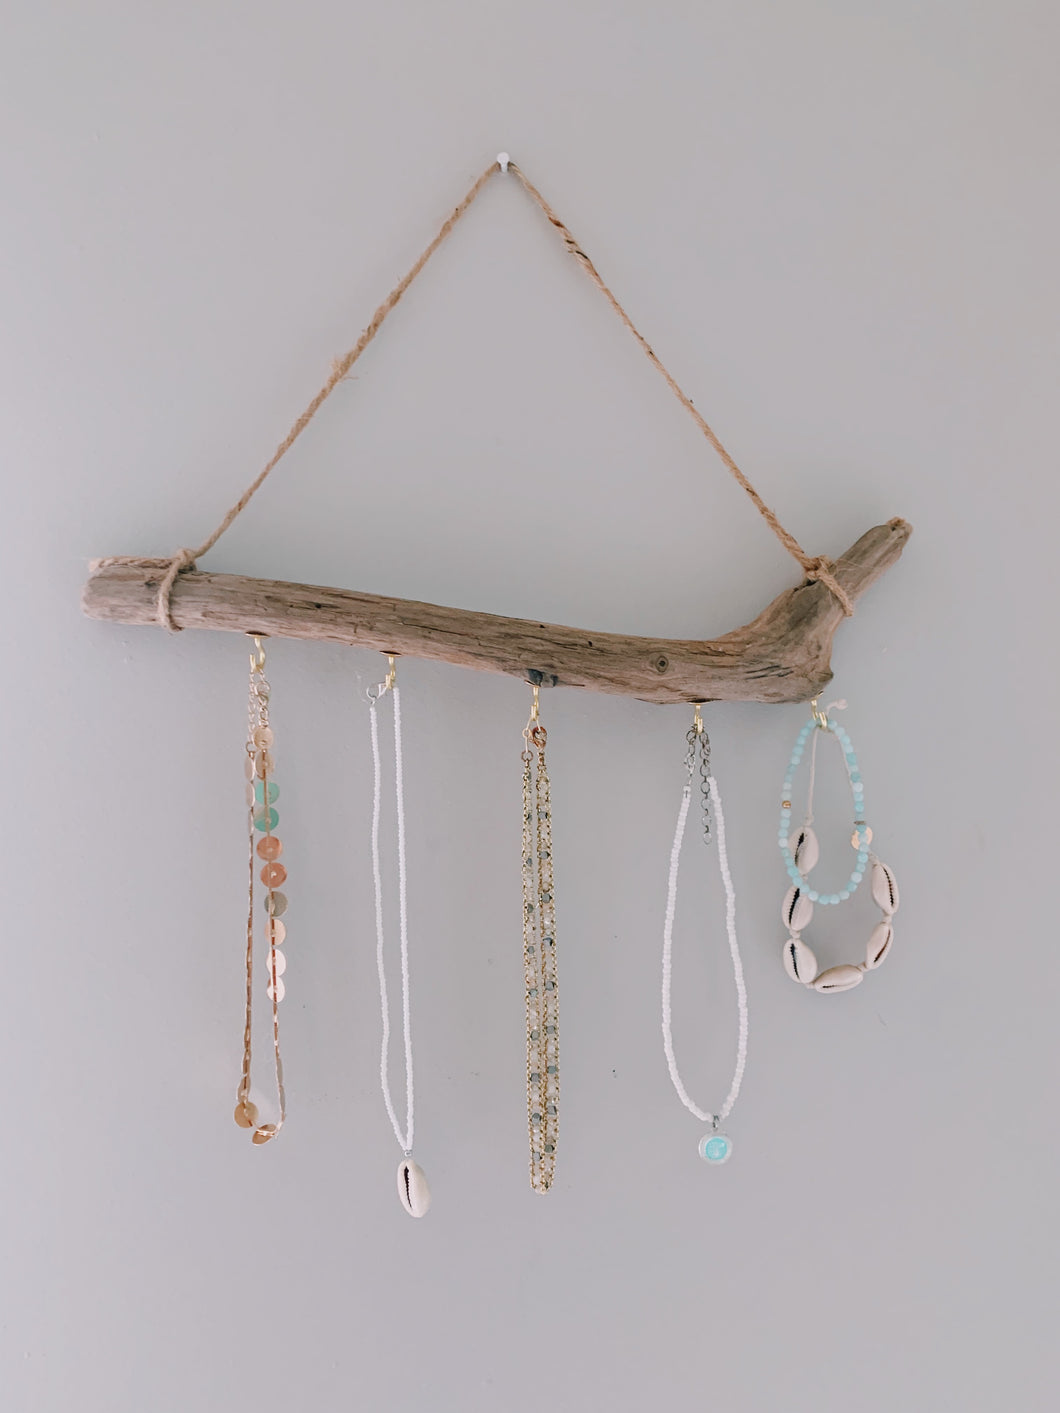 Driftwood jewelry hanger